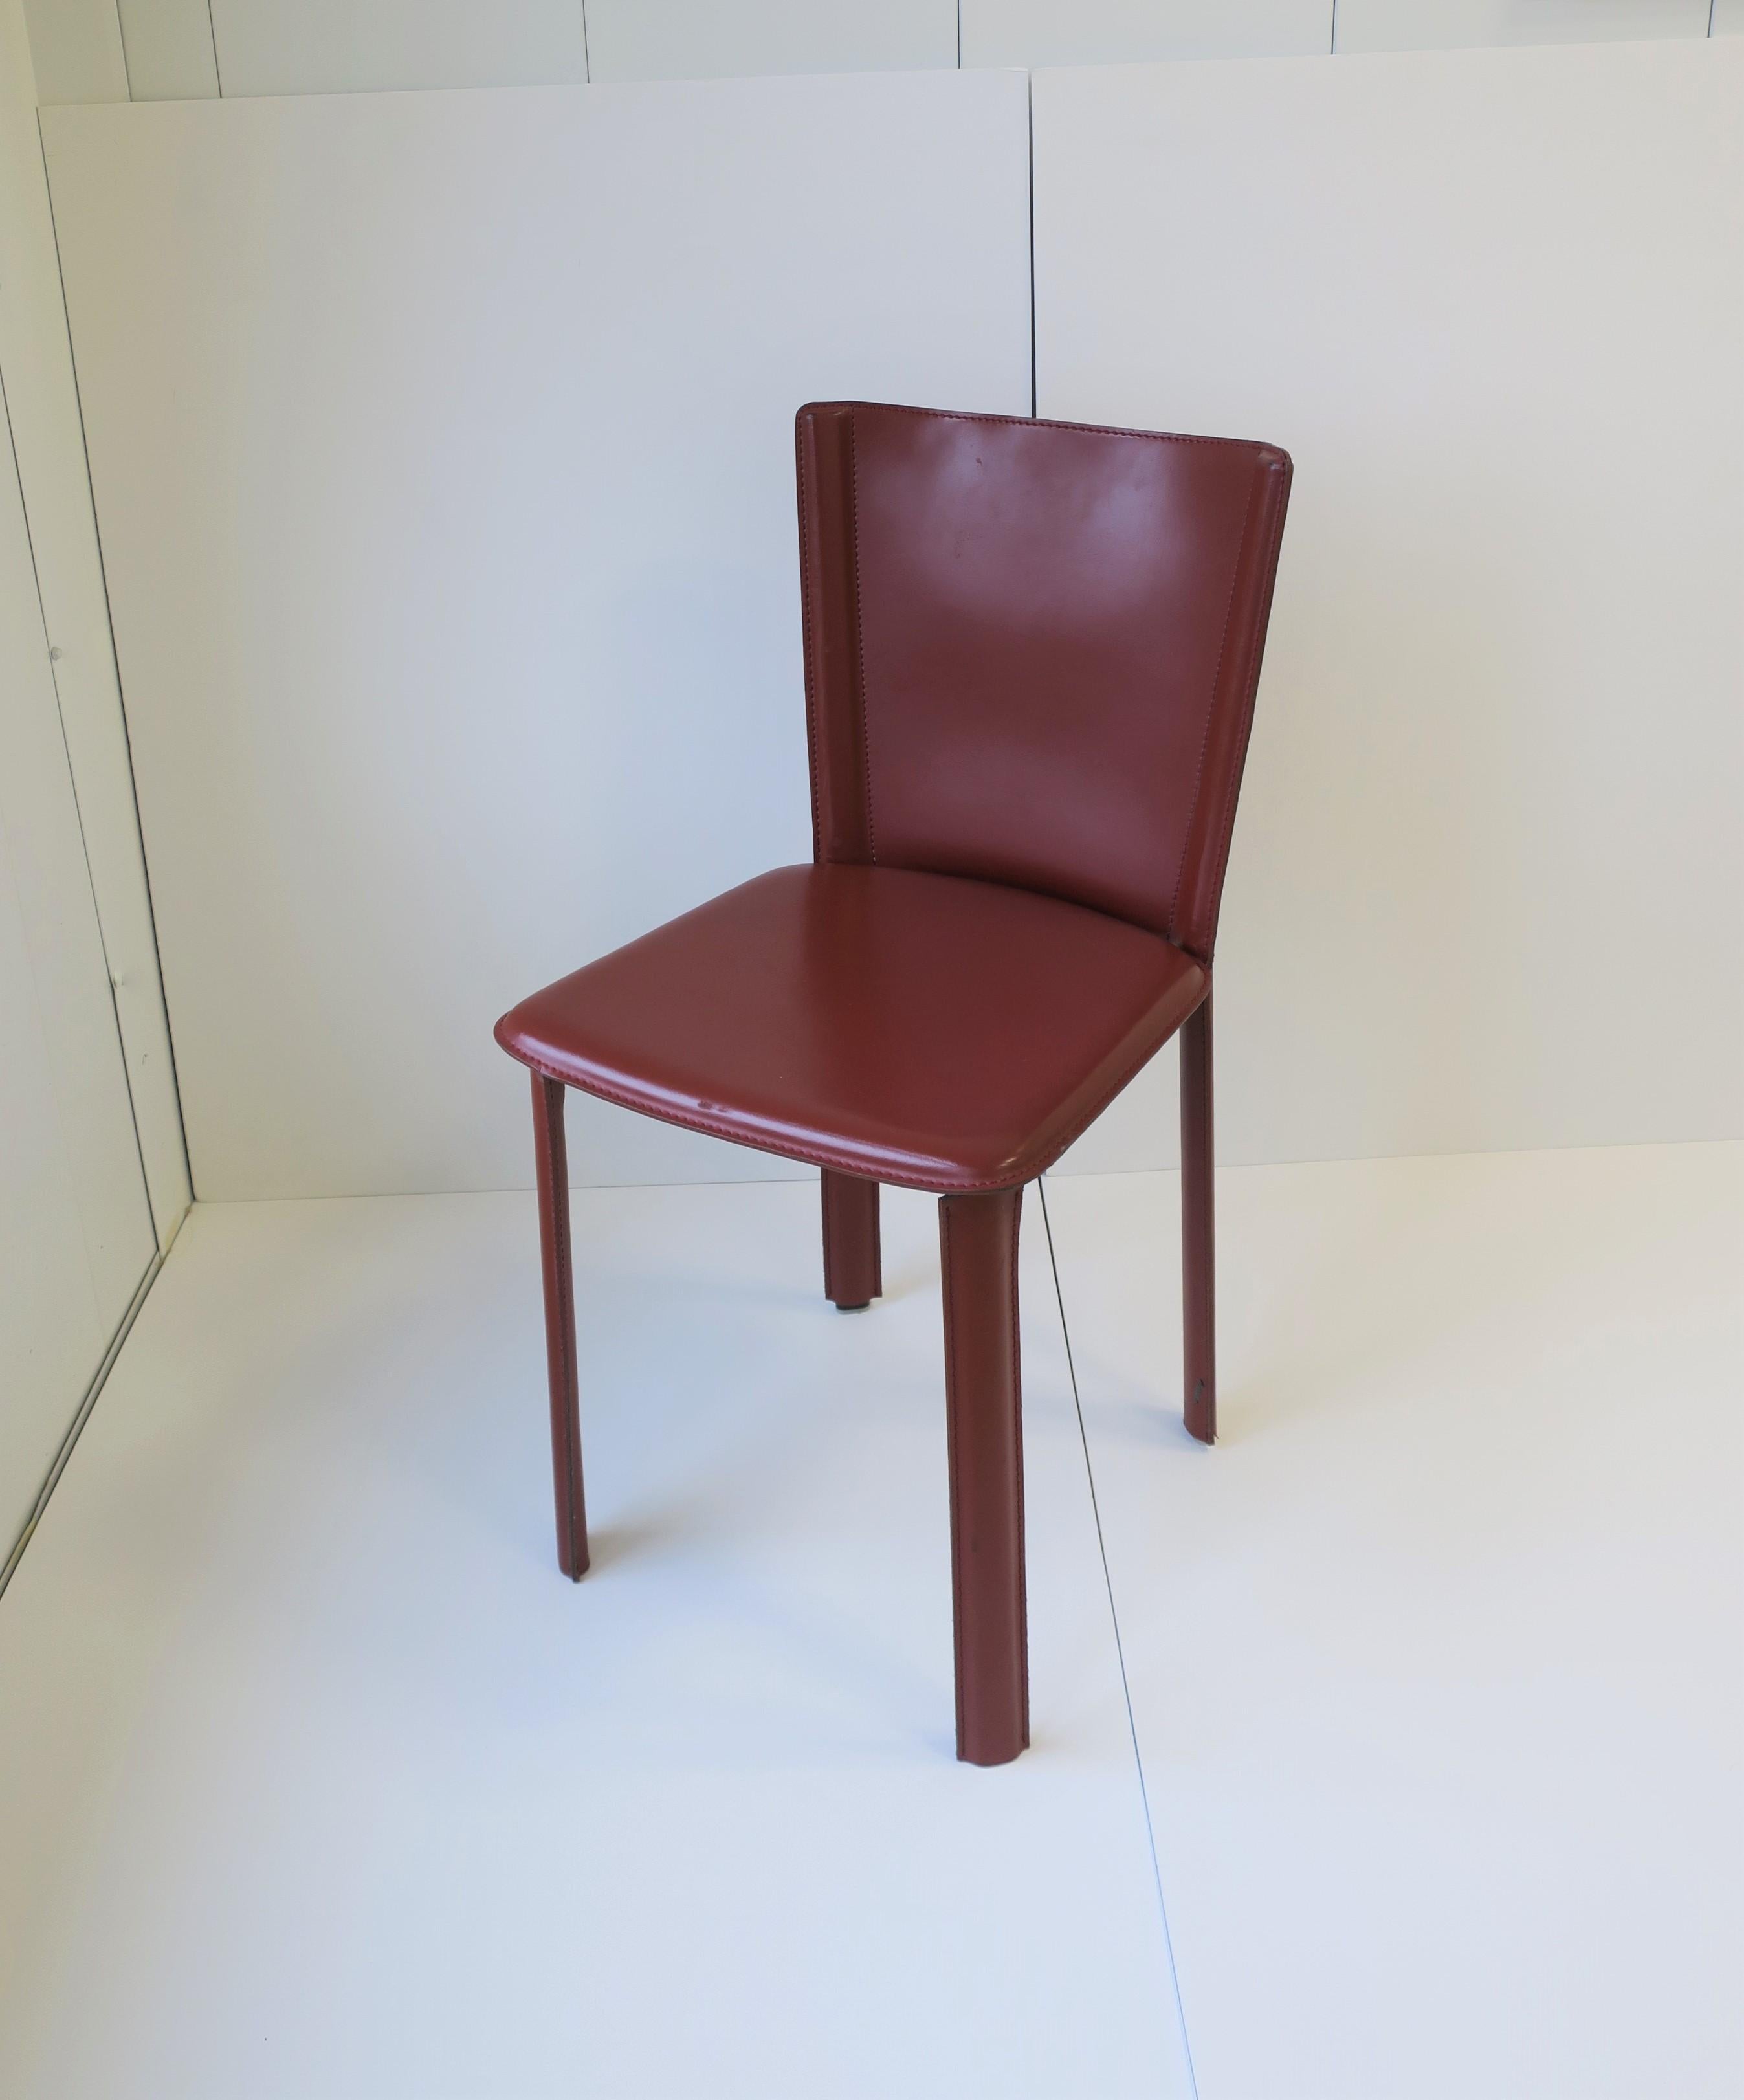 burgundy leather desk chair